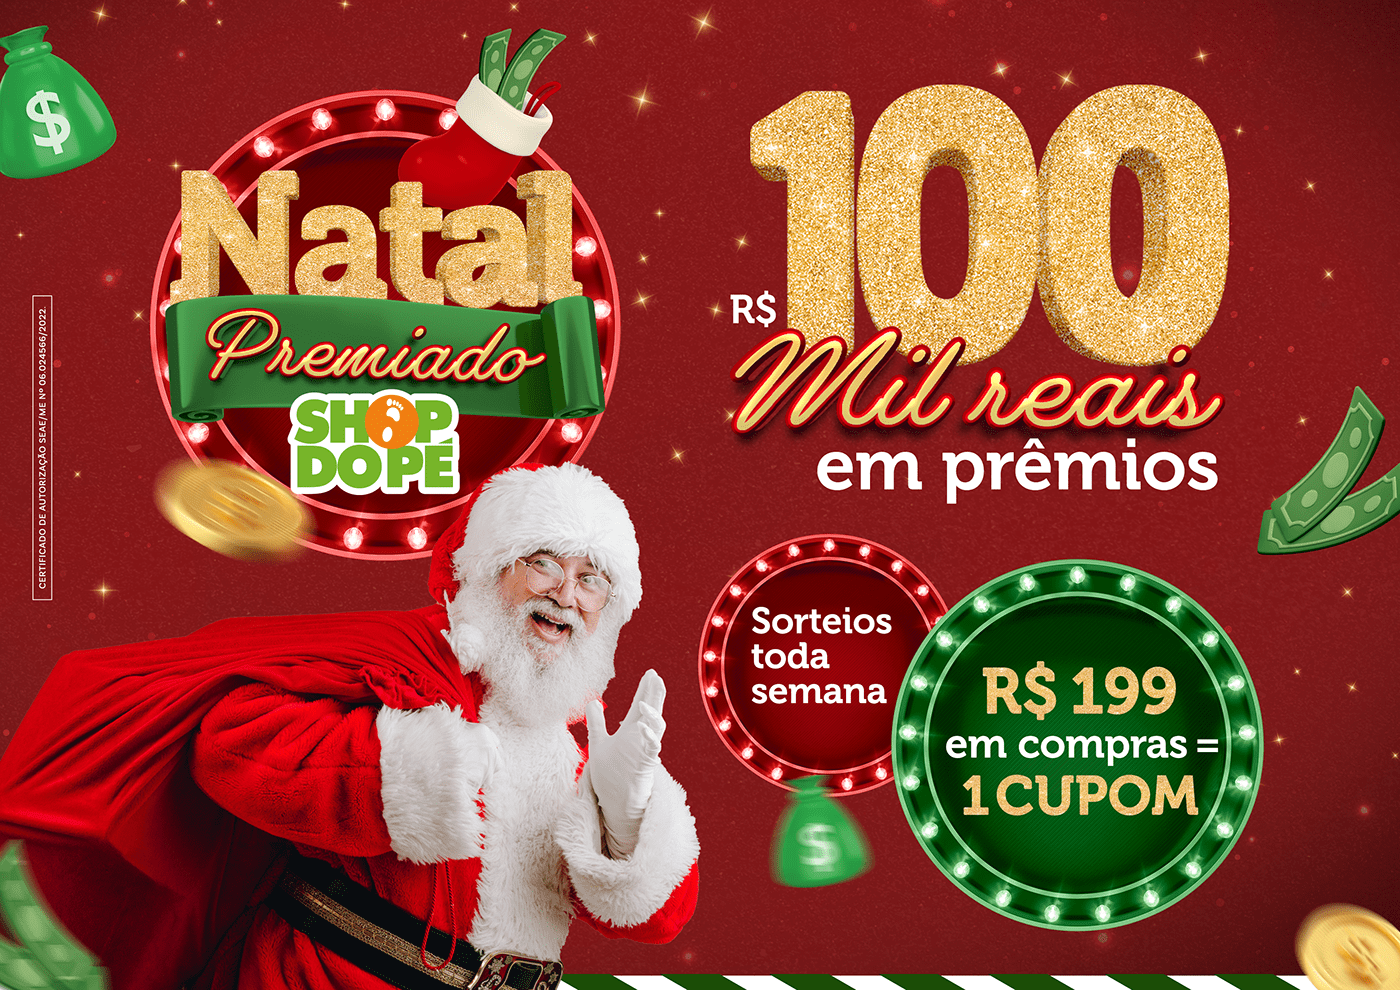 Shop do Pé Amazonas premios pix cupom Papai Noel identidade campanha sorteio NATAL PREMIADO